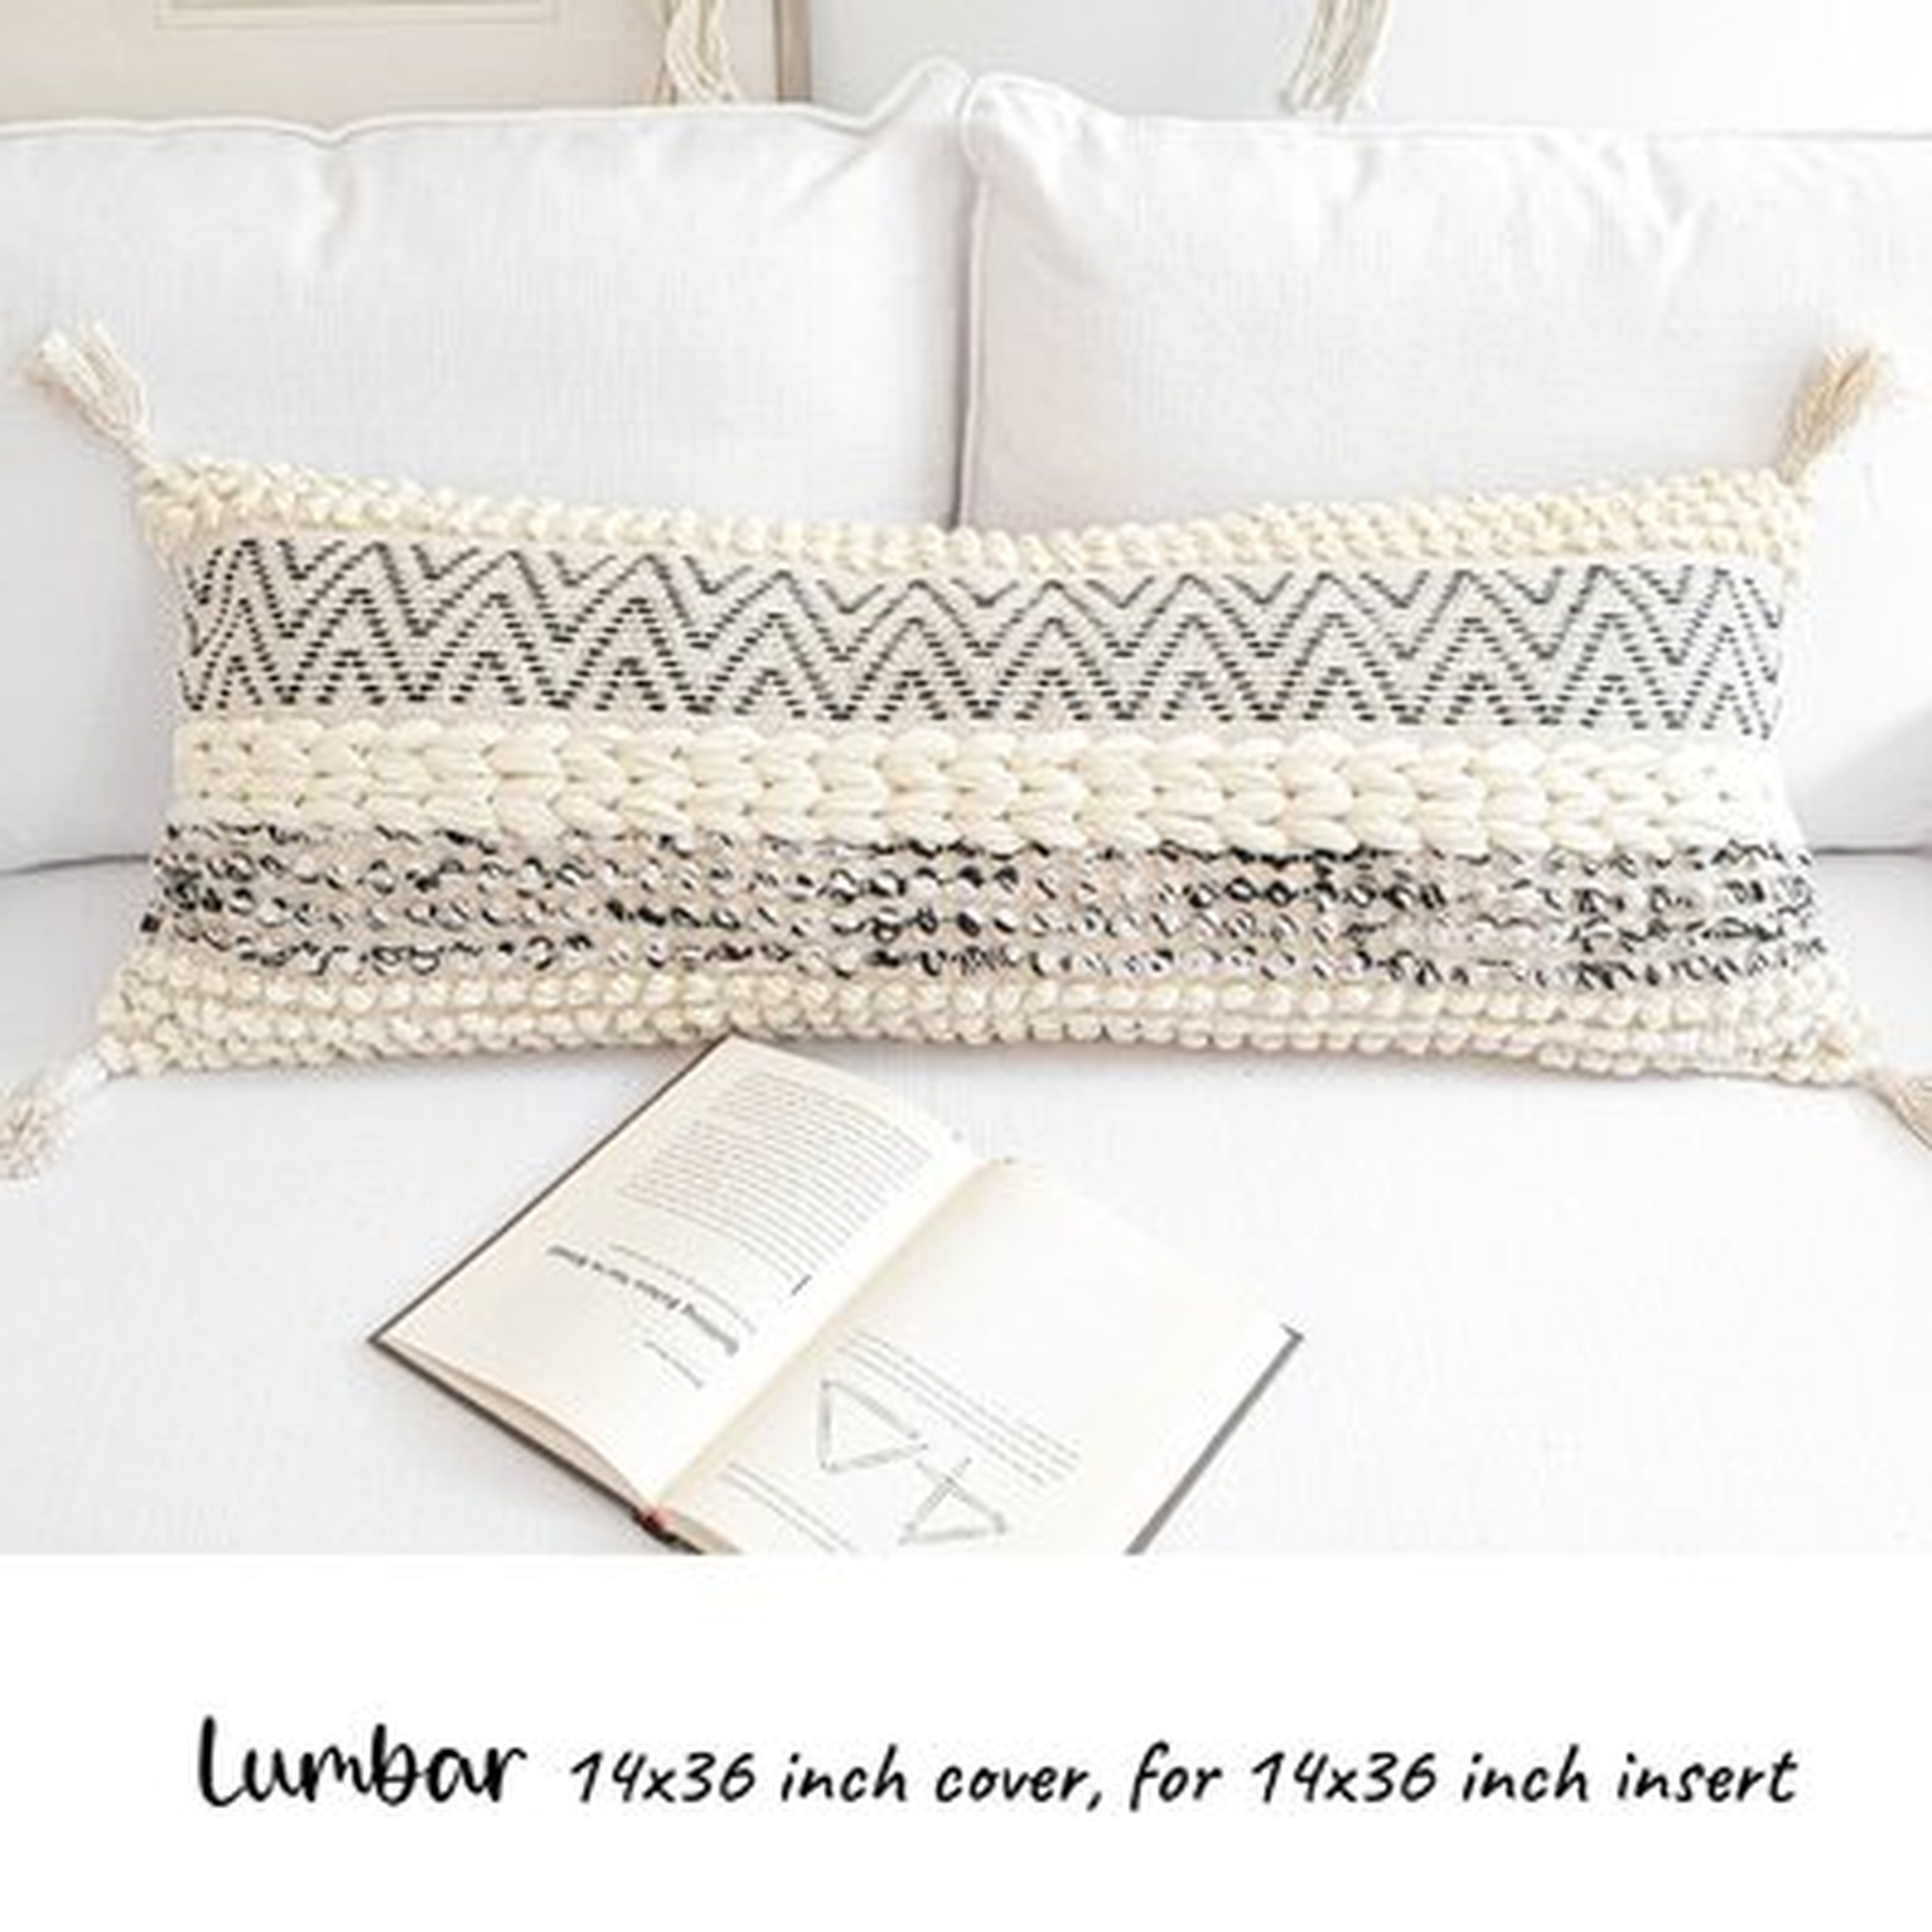 Harvell Boho Textured Long Lumbar Throw Pillow 14X36, Cream And Black Color Pillow Cover (1 Piece, Cover Only) - Wayfair